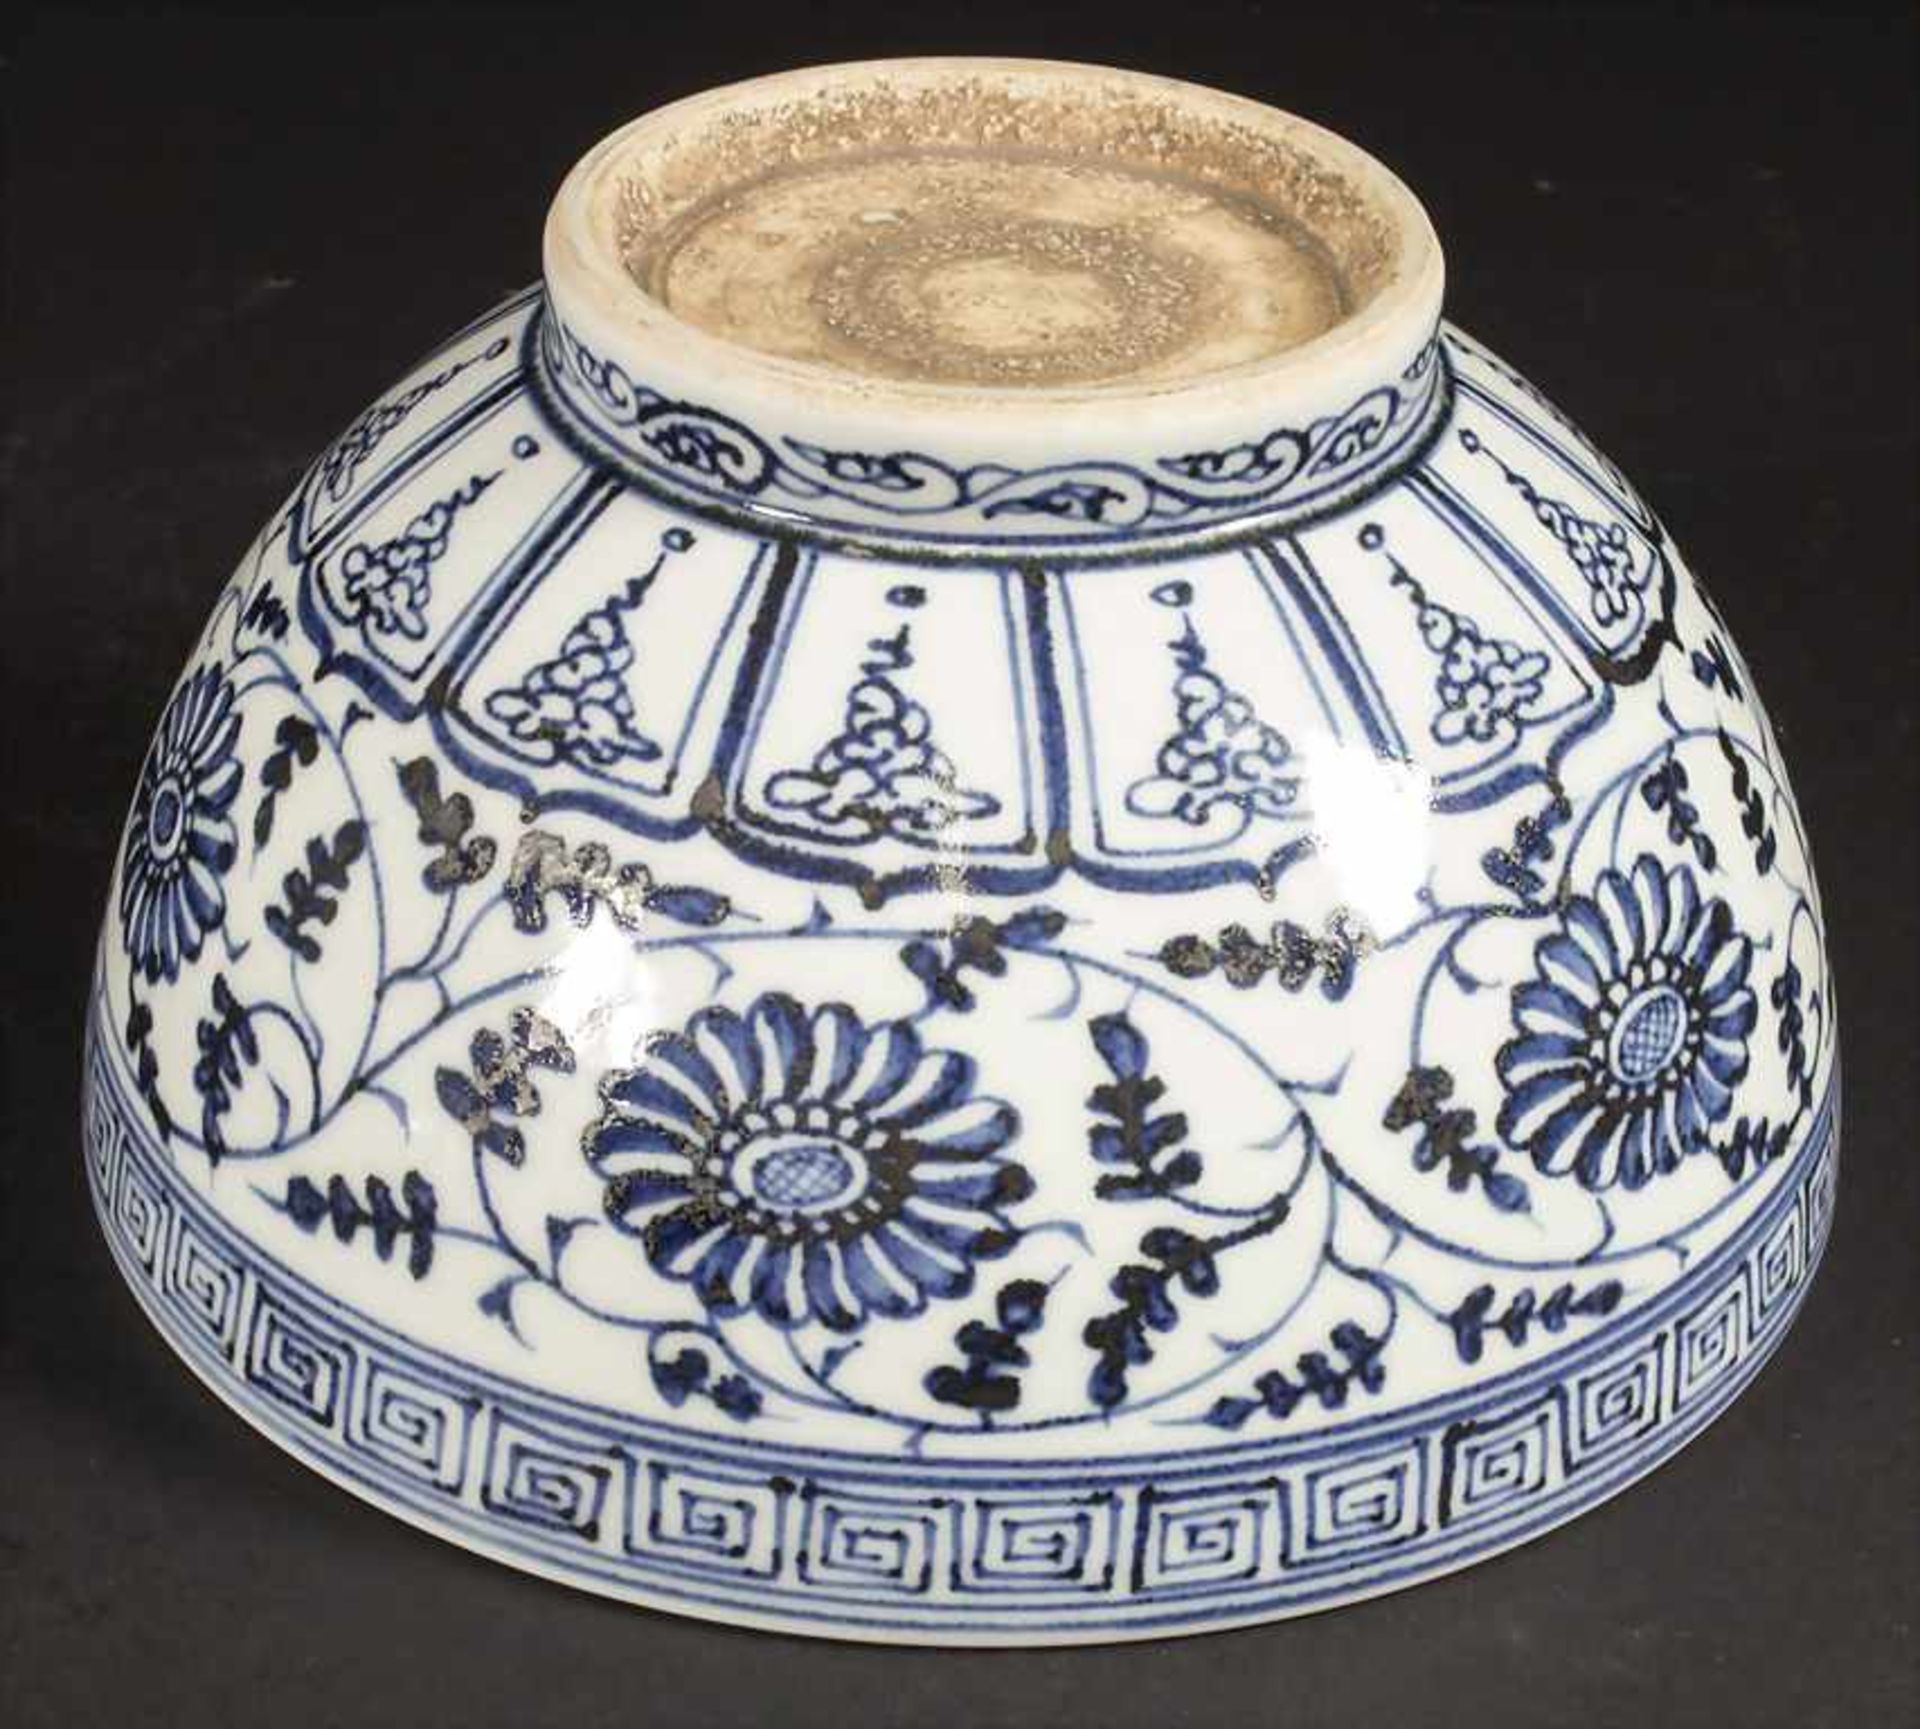 Porzellan-Kumme / A porcelain bowl, China, wohl Qing-Dynastie (1644-1911) - Image 6 of 7